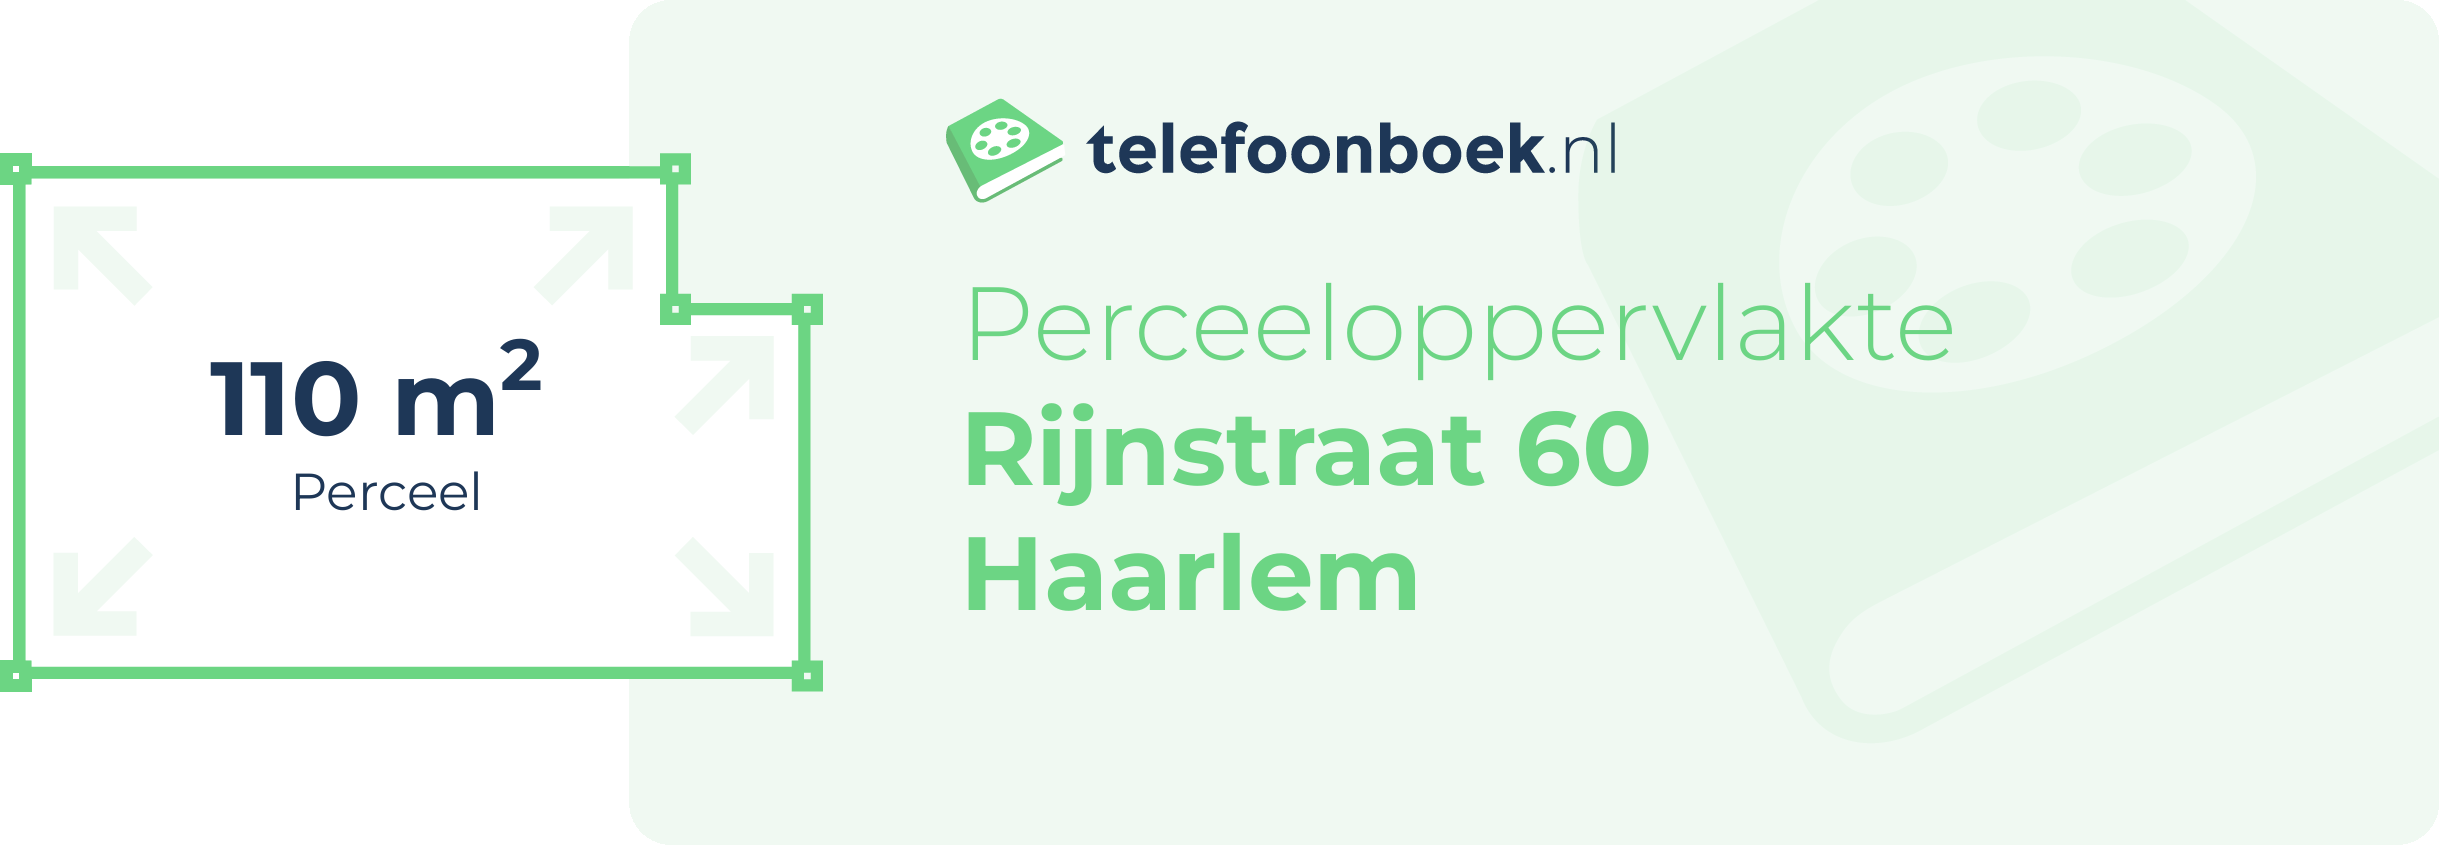 Perceeloppervlakte Rijnstraat 60 Haarlem